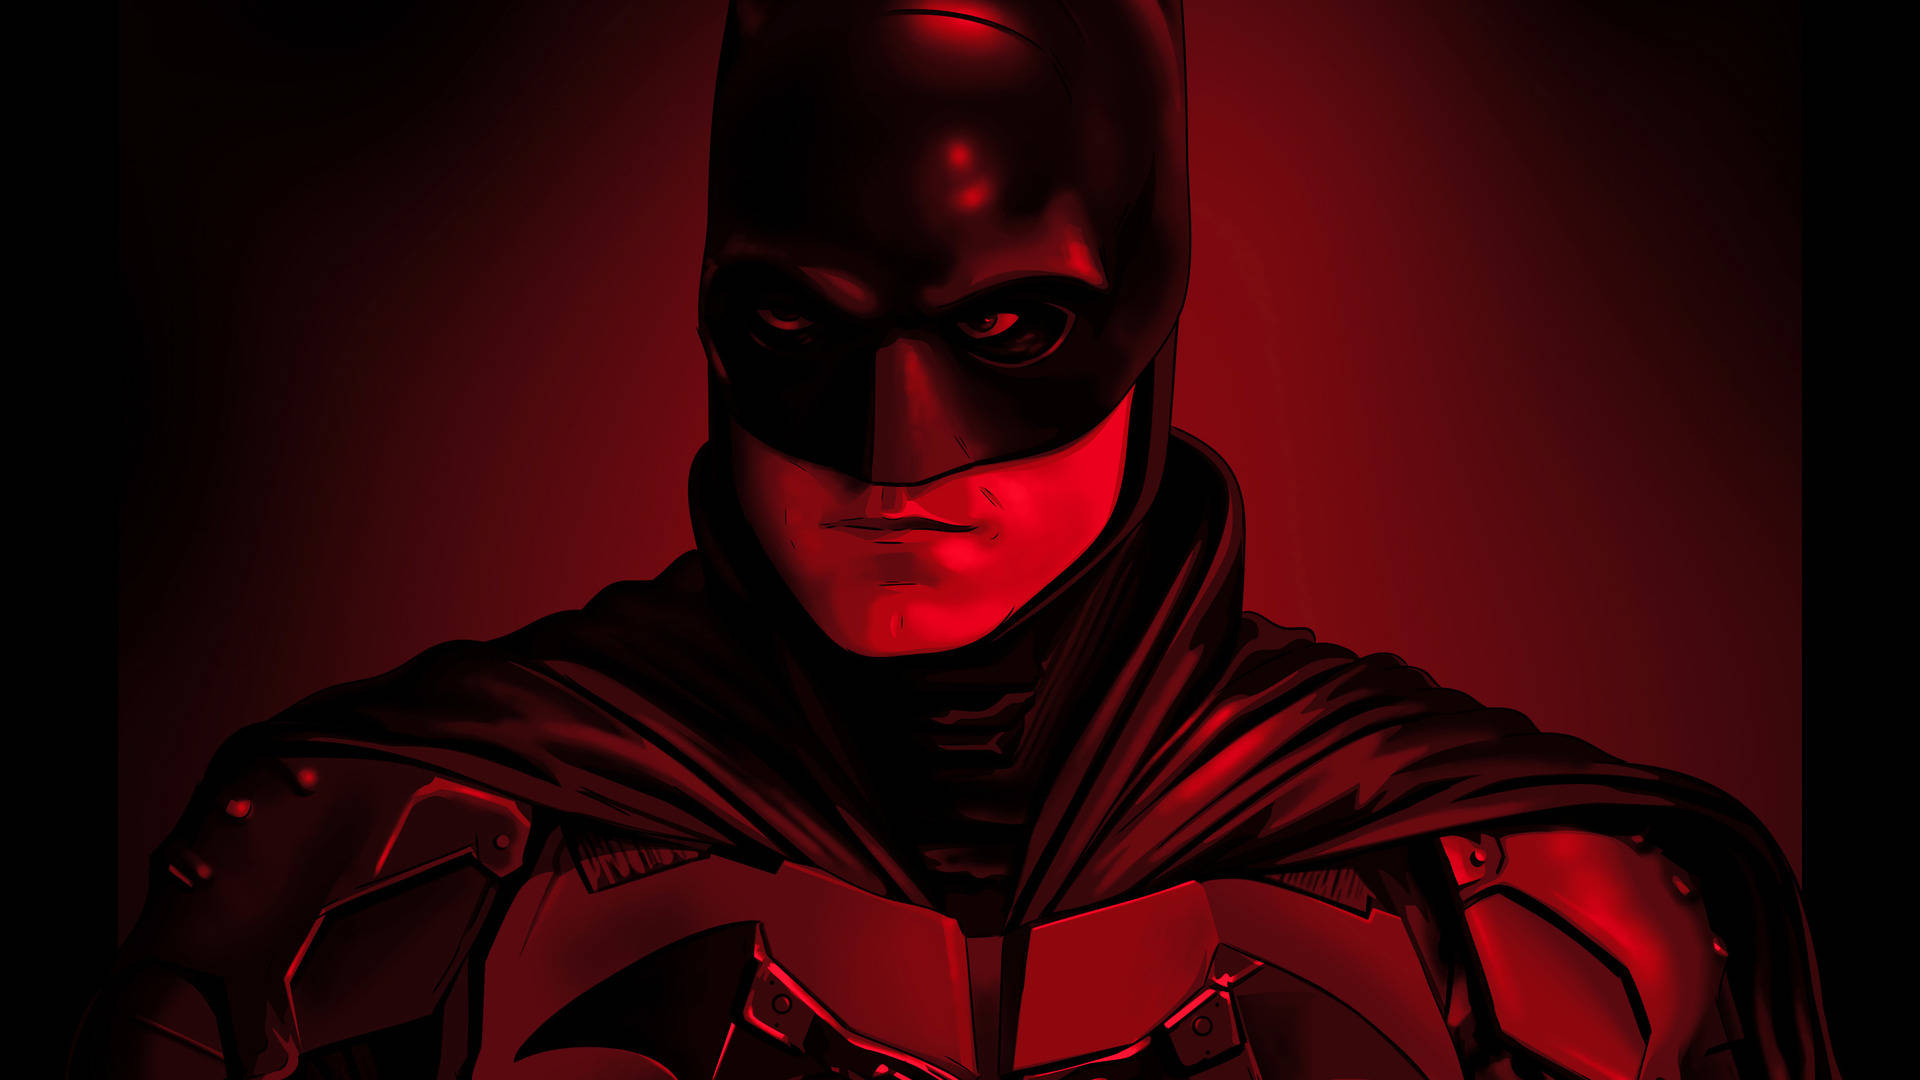 The Batman Red Aesthetic Wallpaper